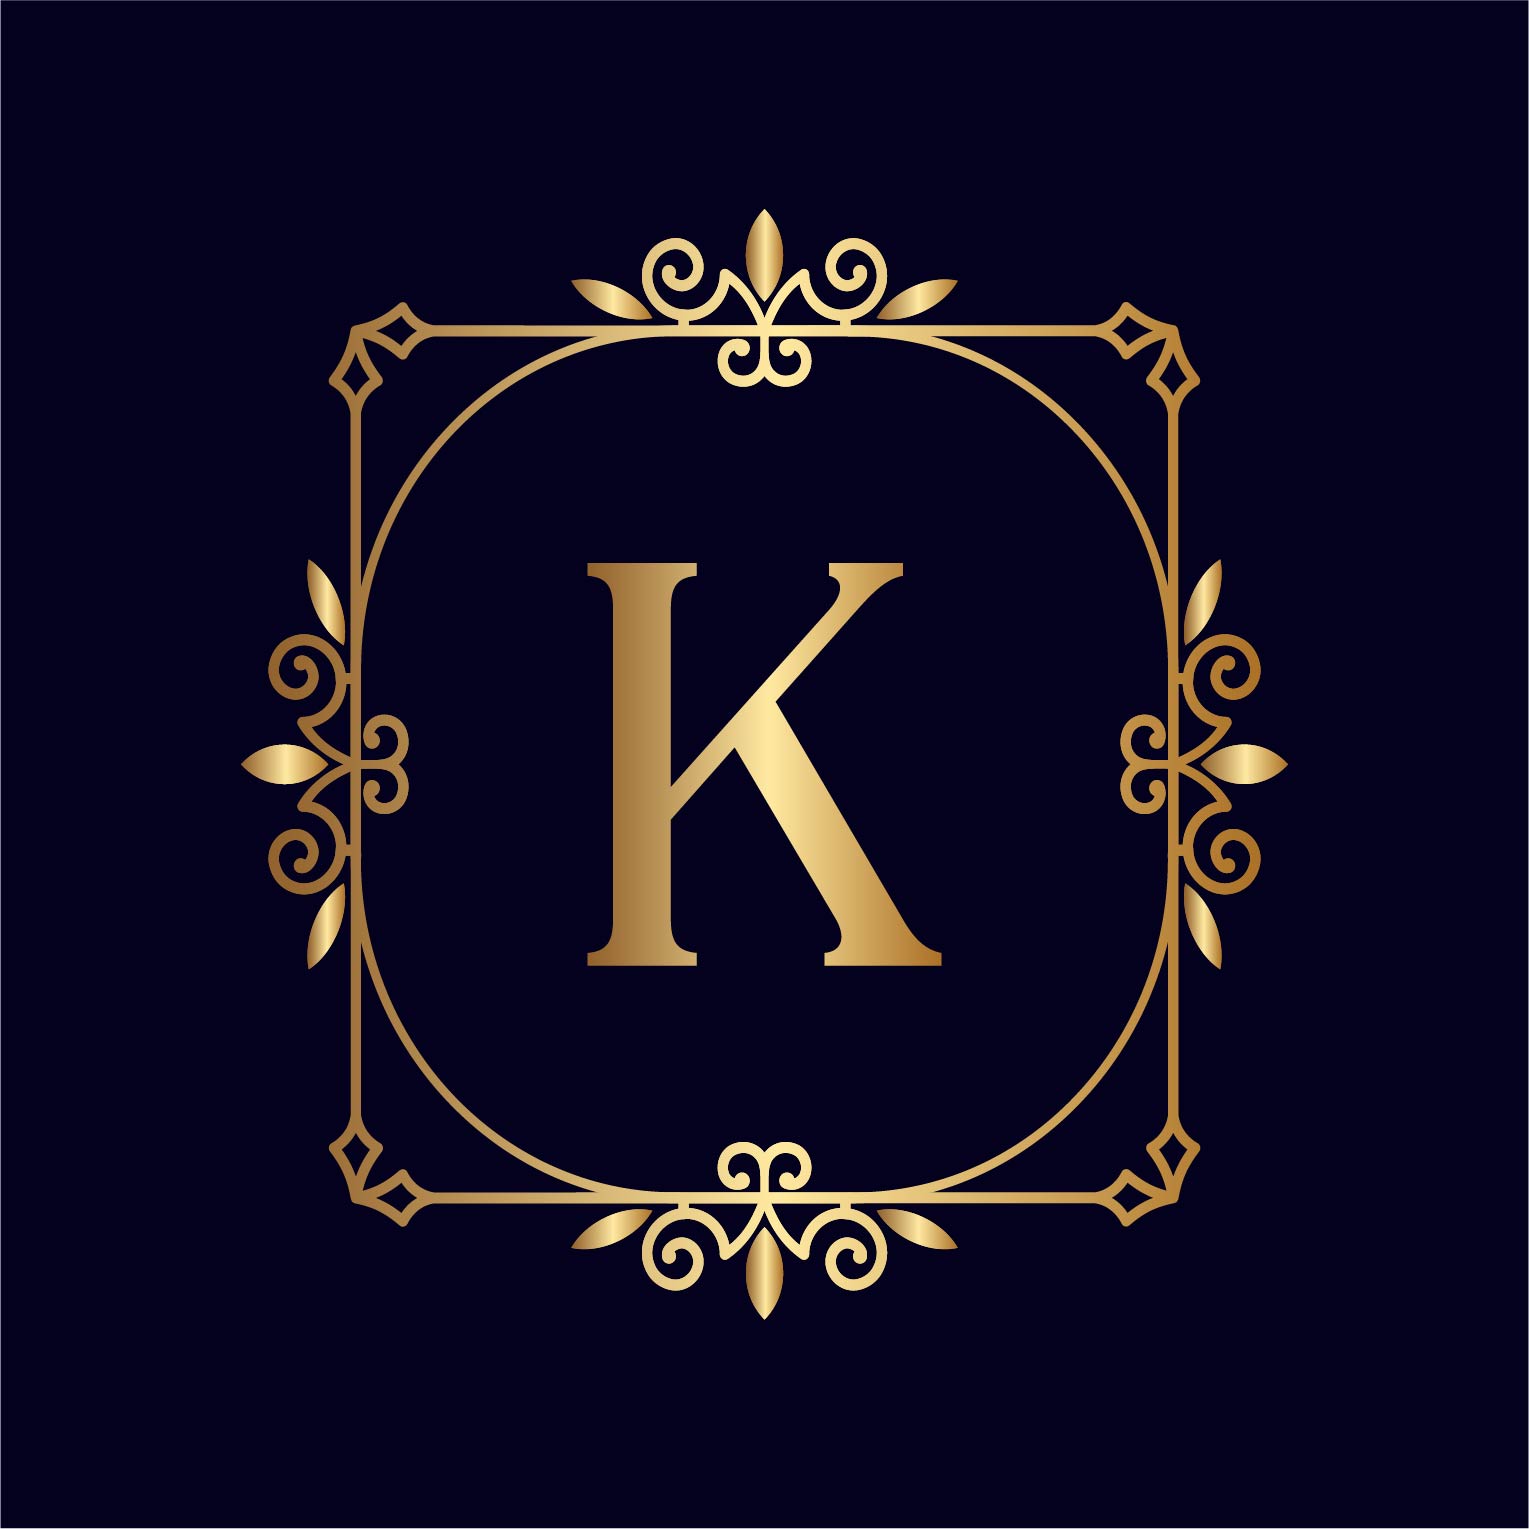 Artistic Gold Letter K Logos Design preview image.